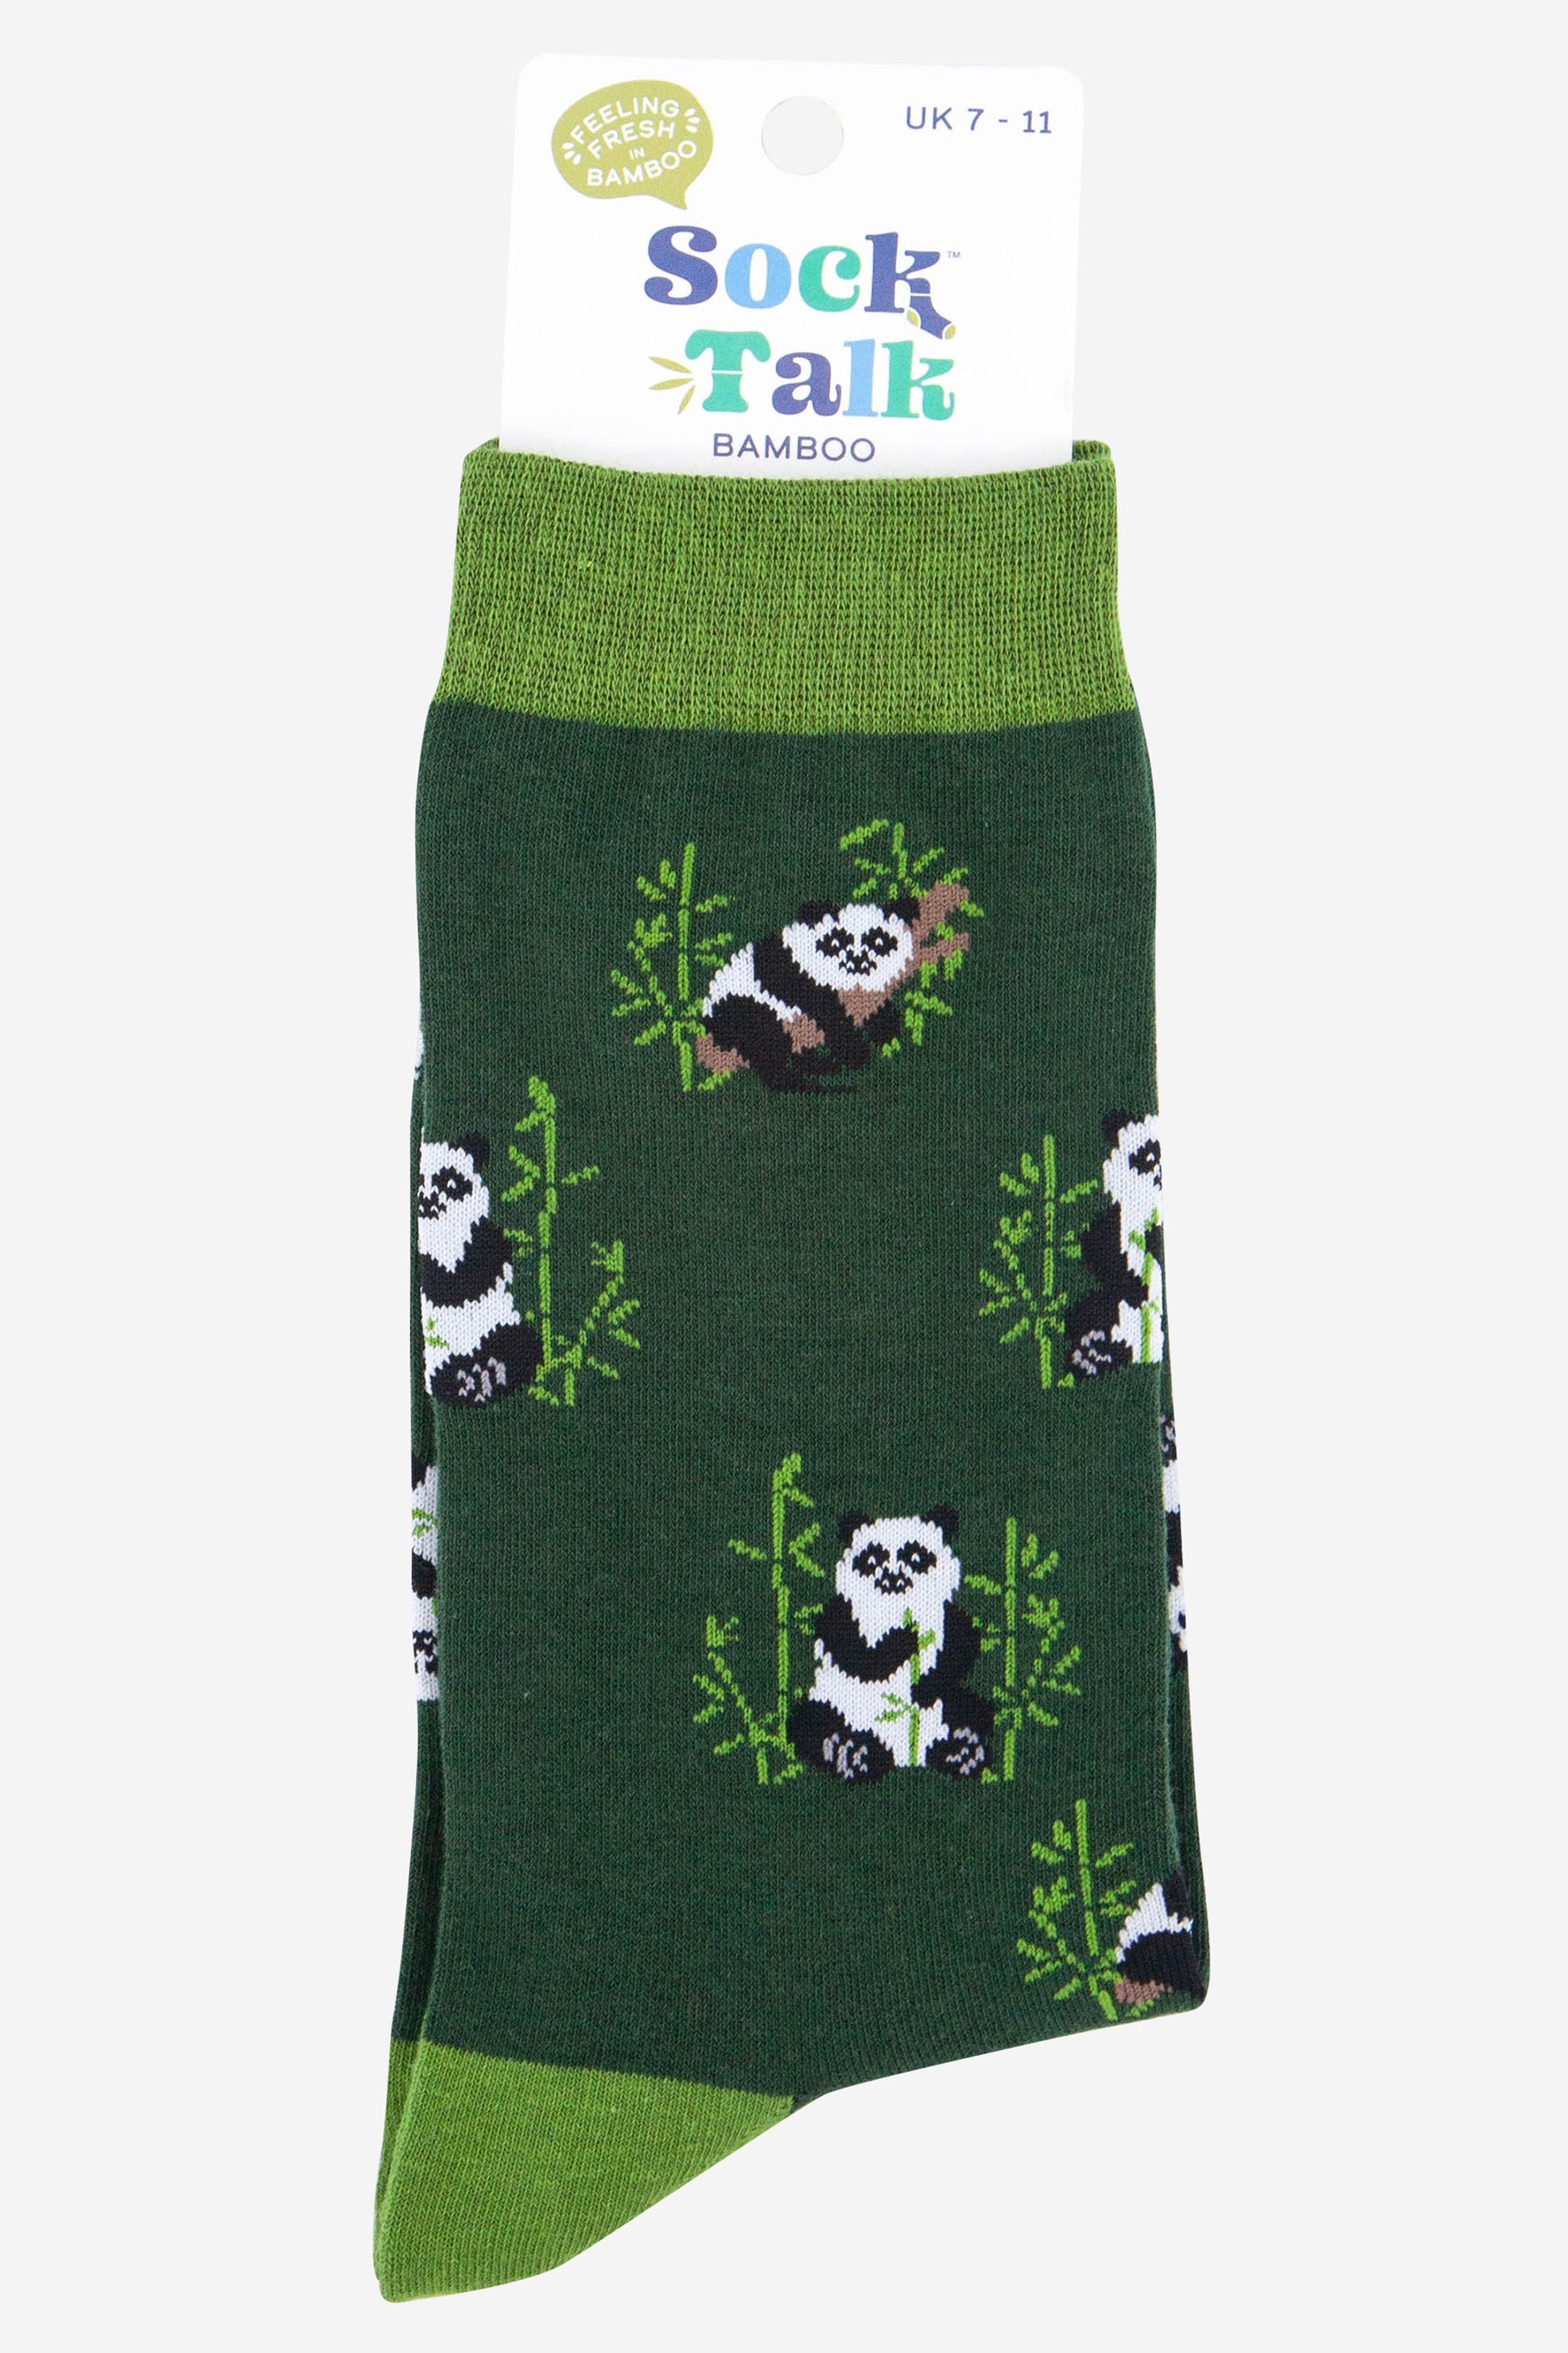 mens panda bamboo socks in green uk size 7-11